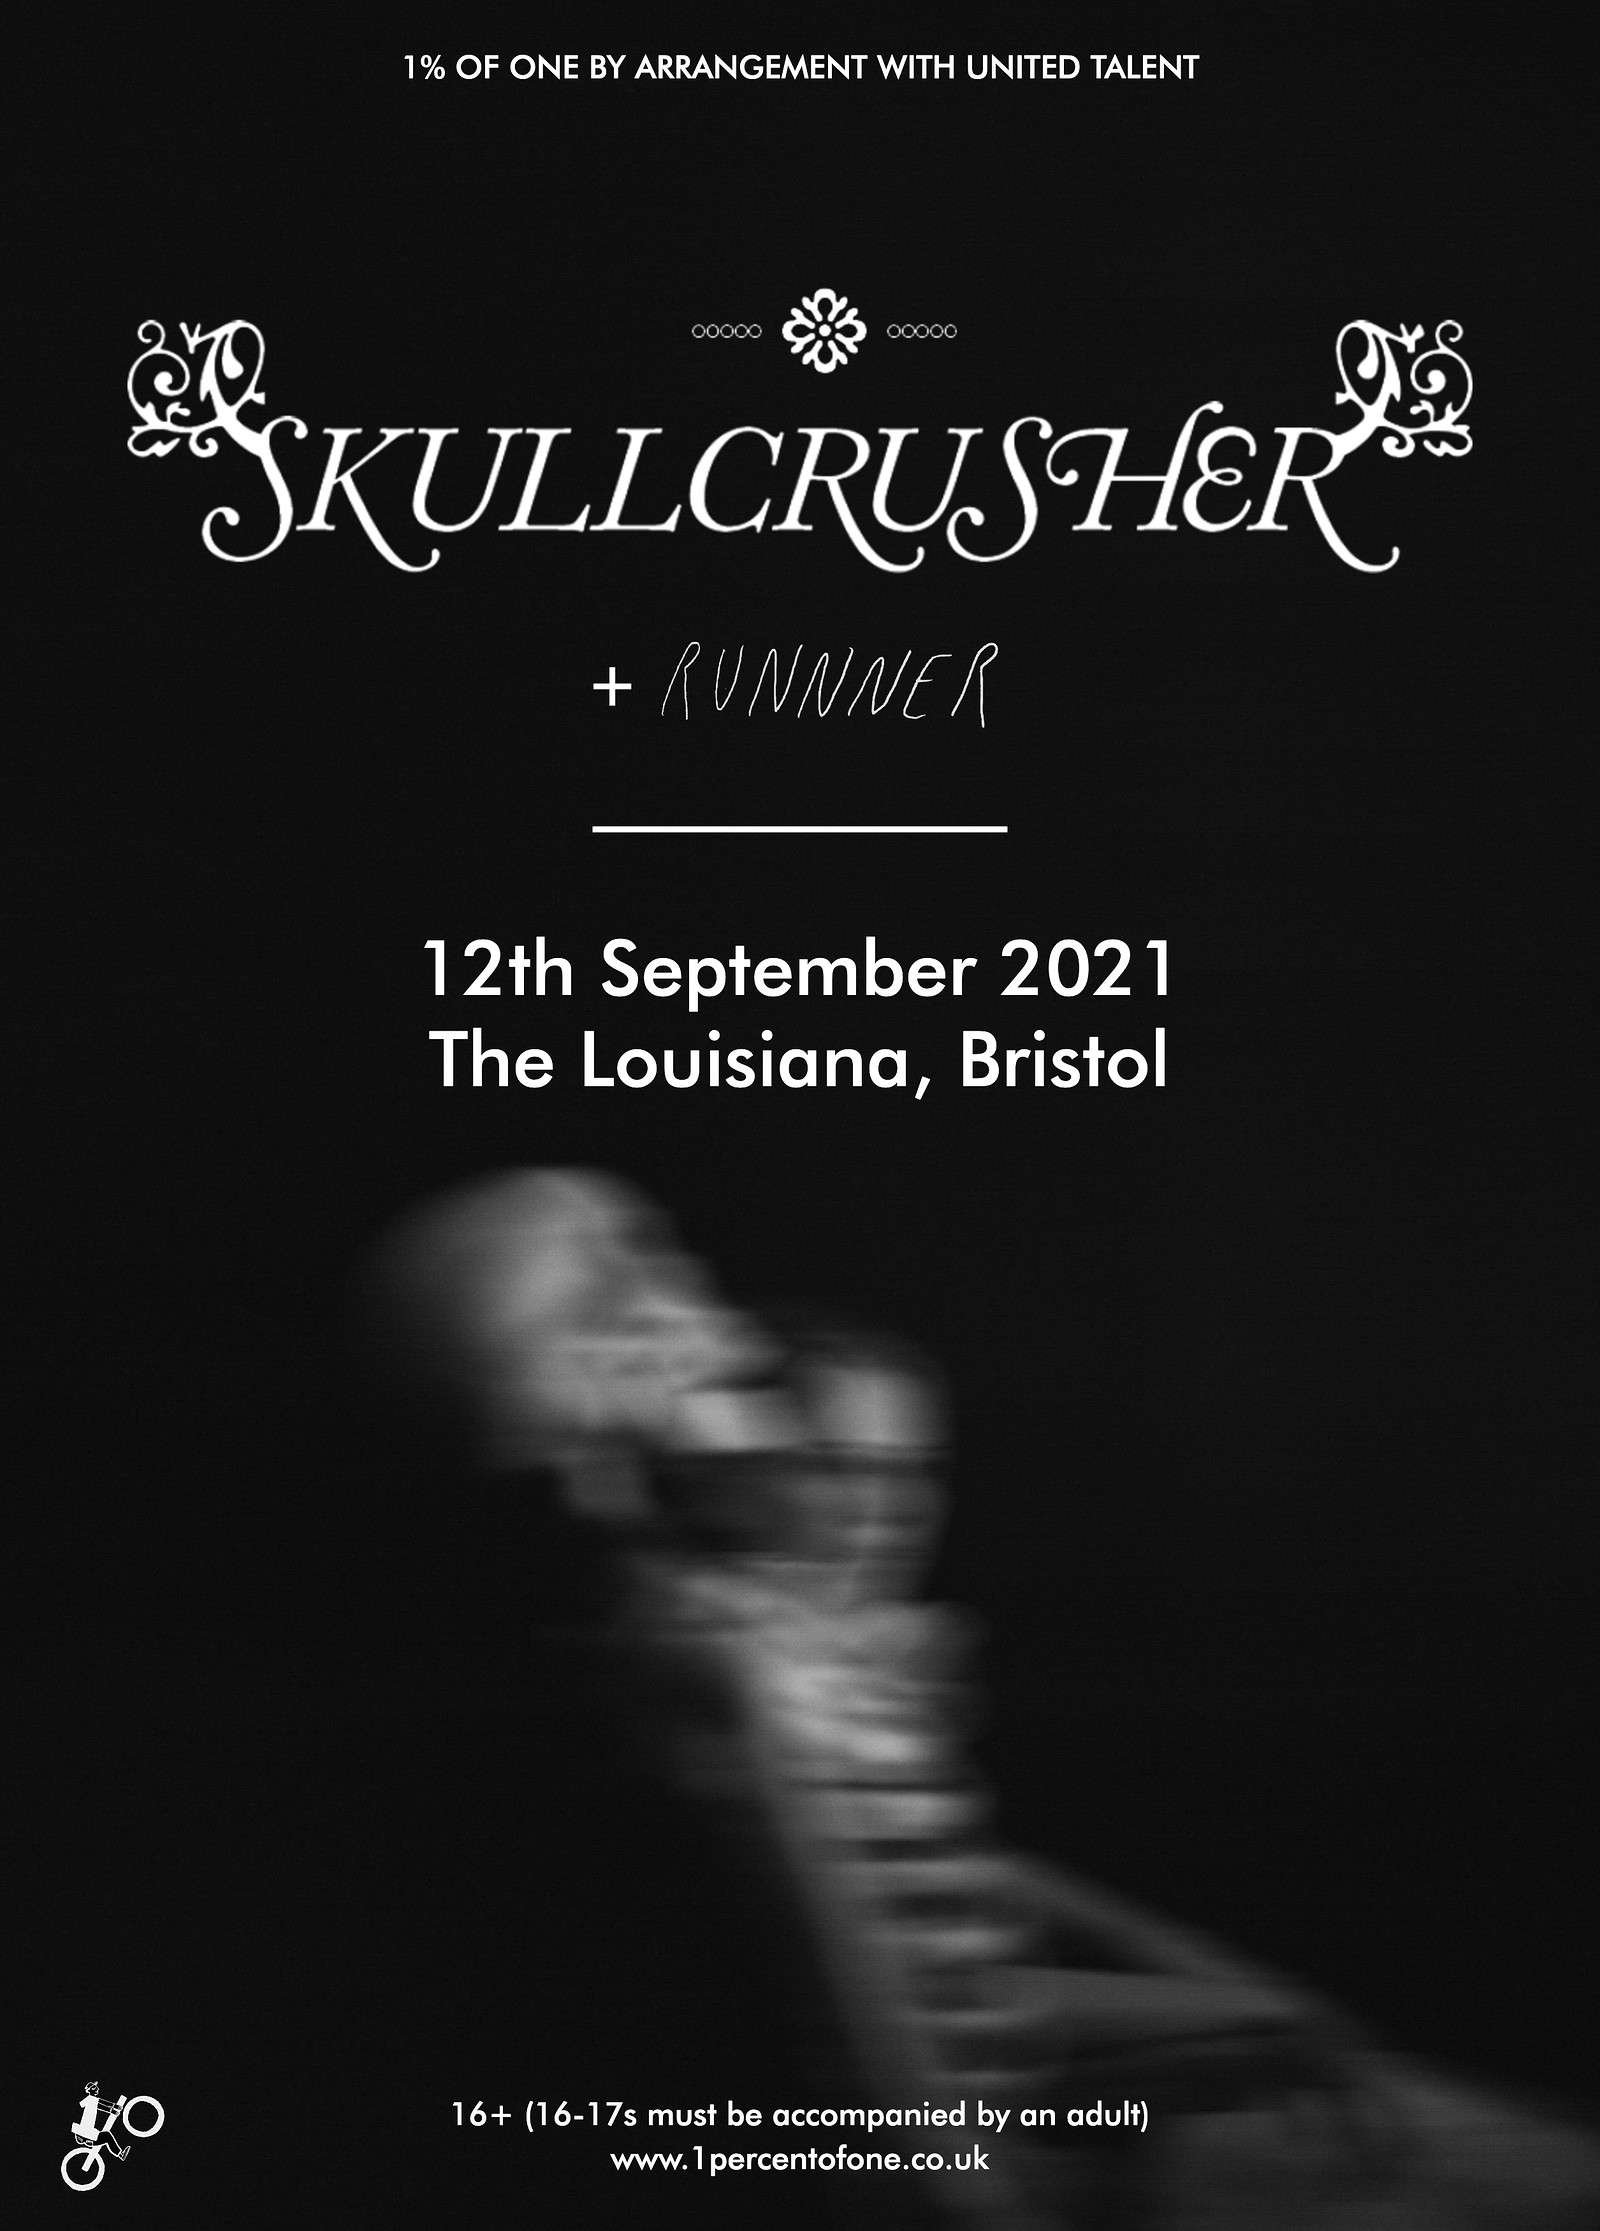 Skullcrusher at The Louisiana